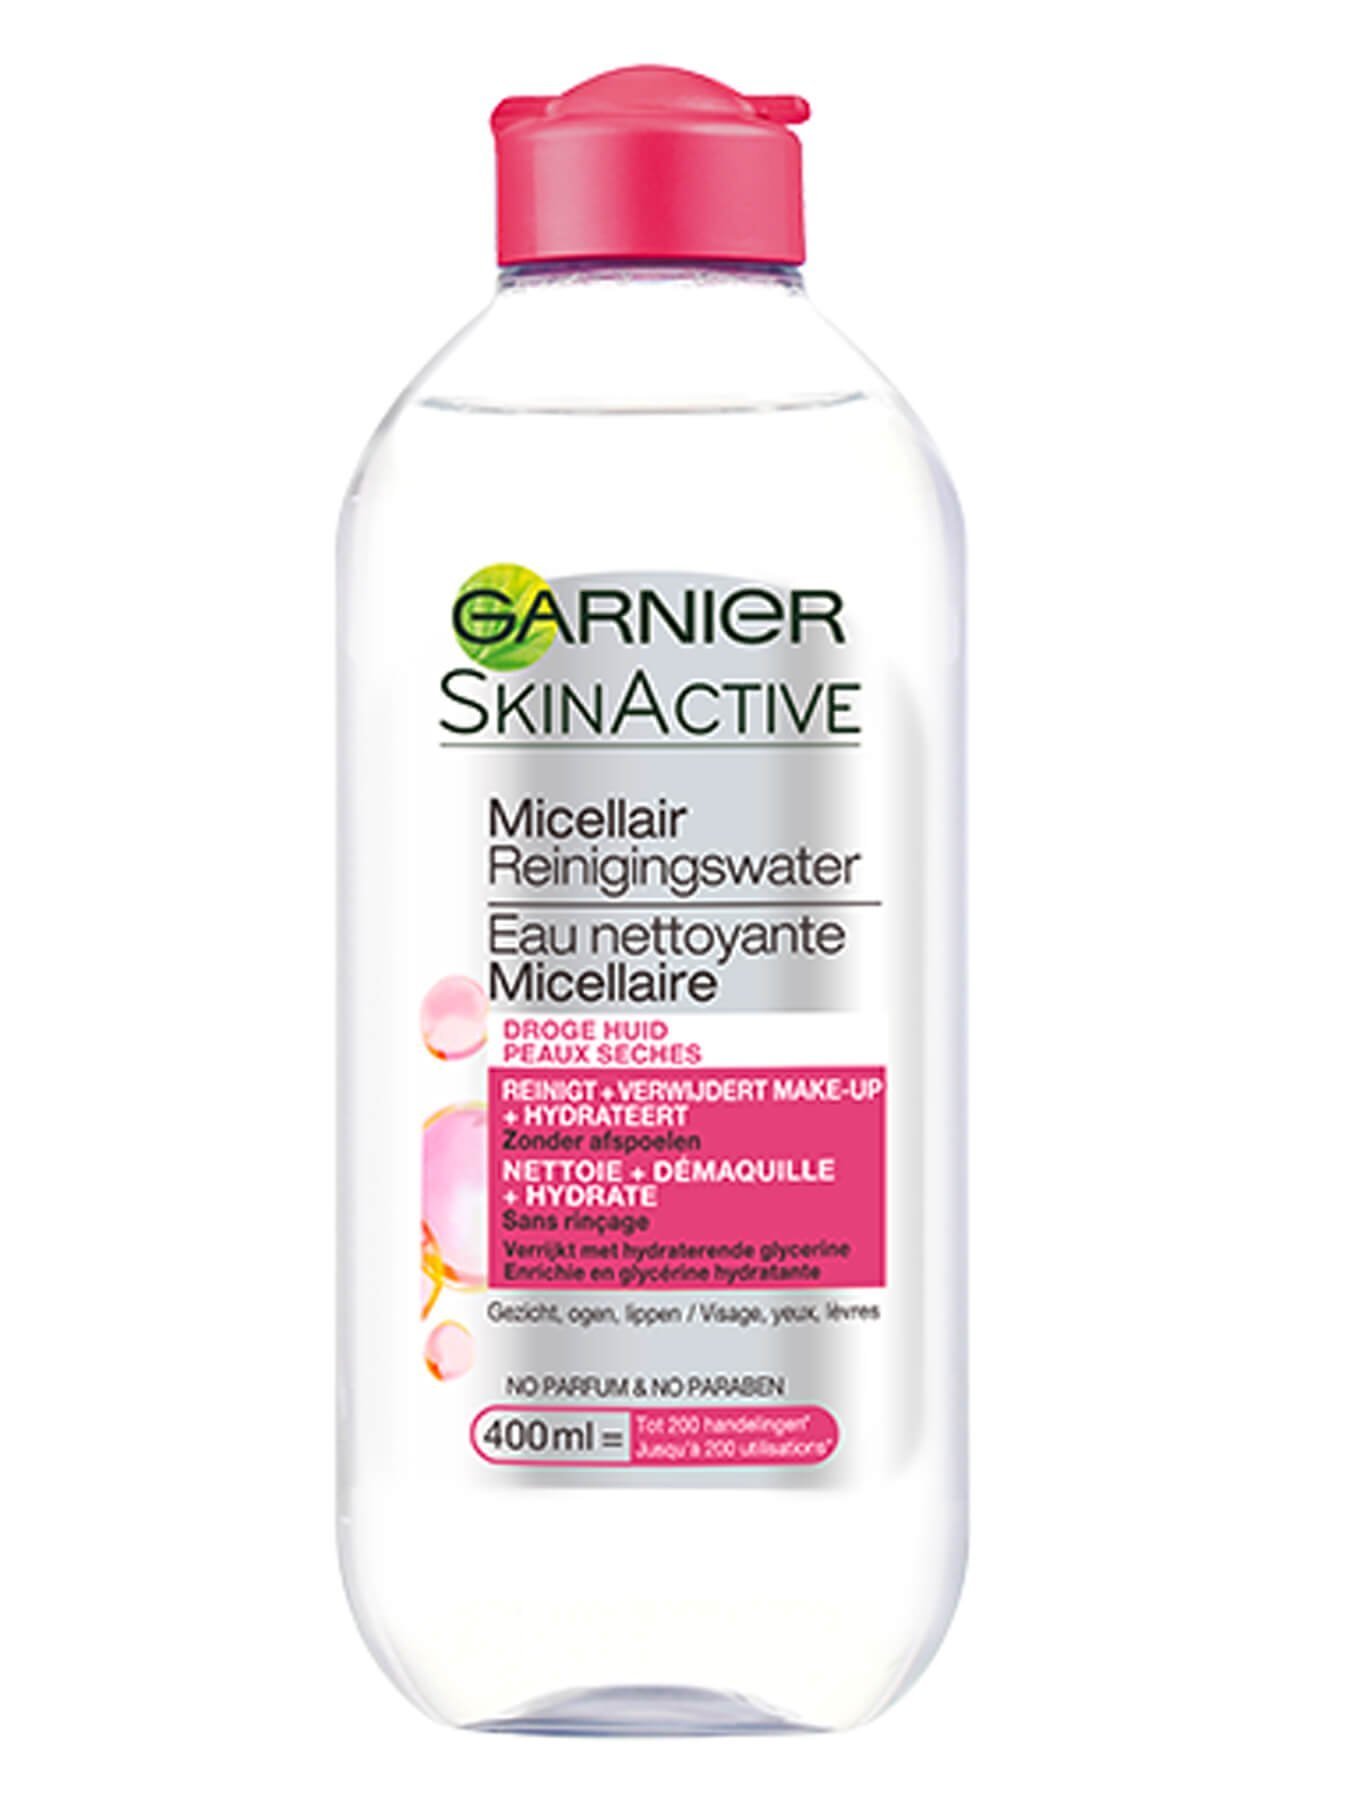 Garnier SkinActive eau nettoyante micellair peaux seches